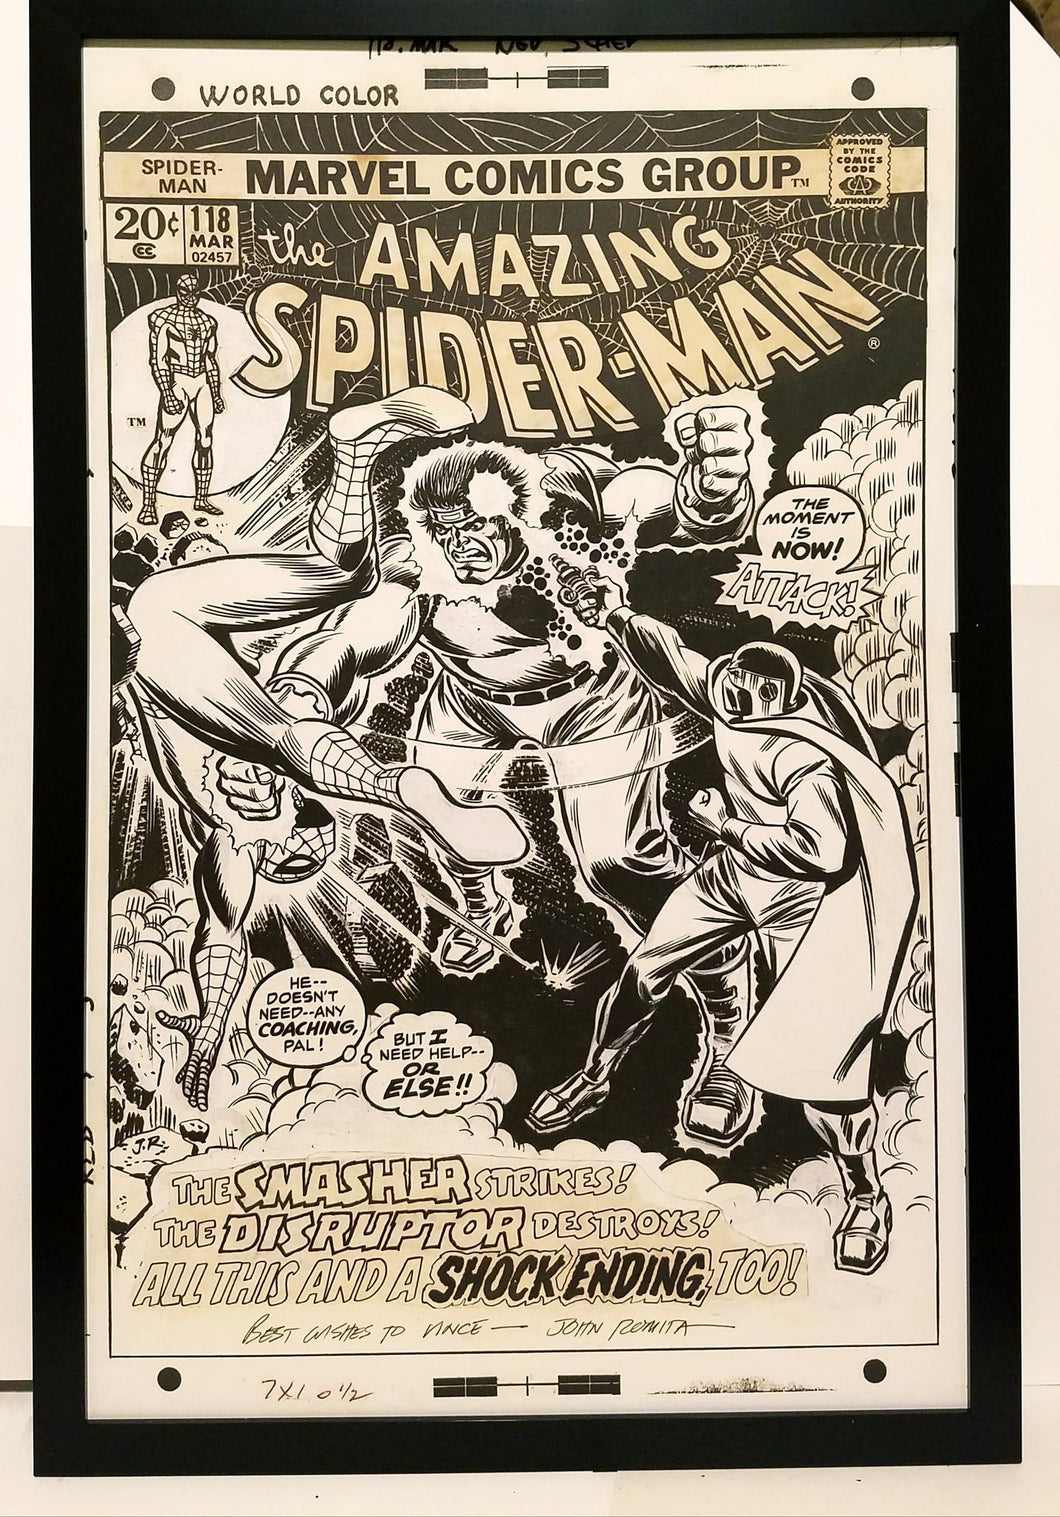 Amazing Spider-Man #118 by John Romita 11x17 FRAMED Original Art Poster Marvel Comics